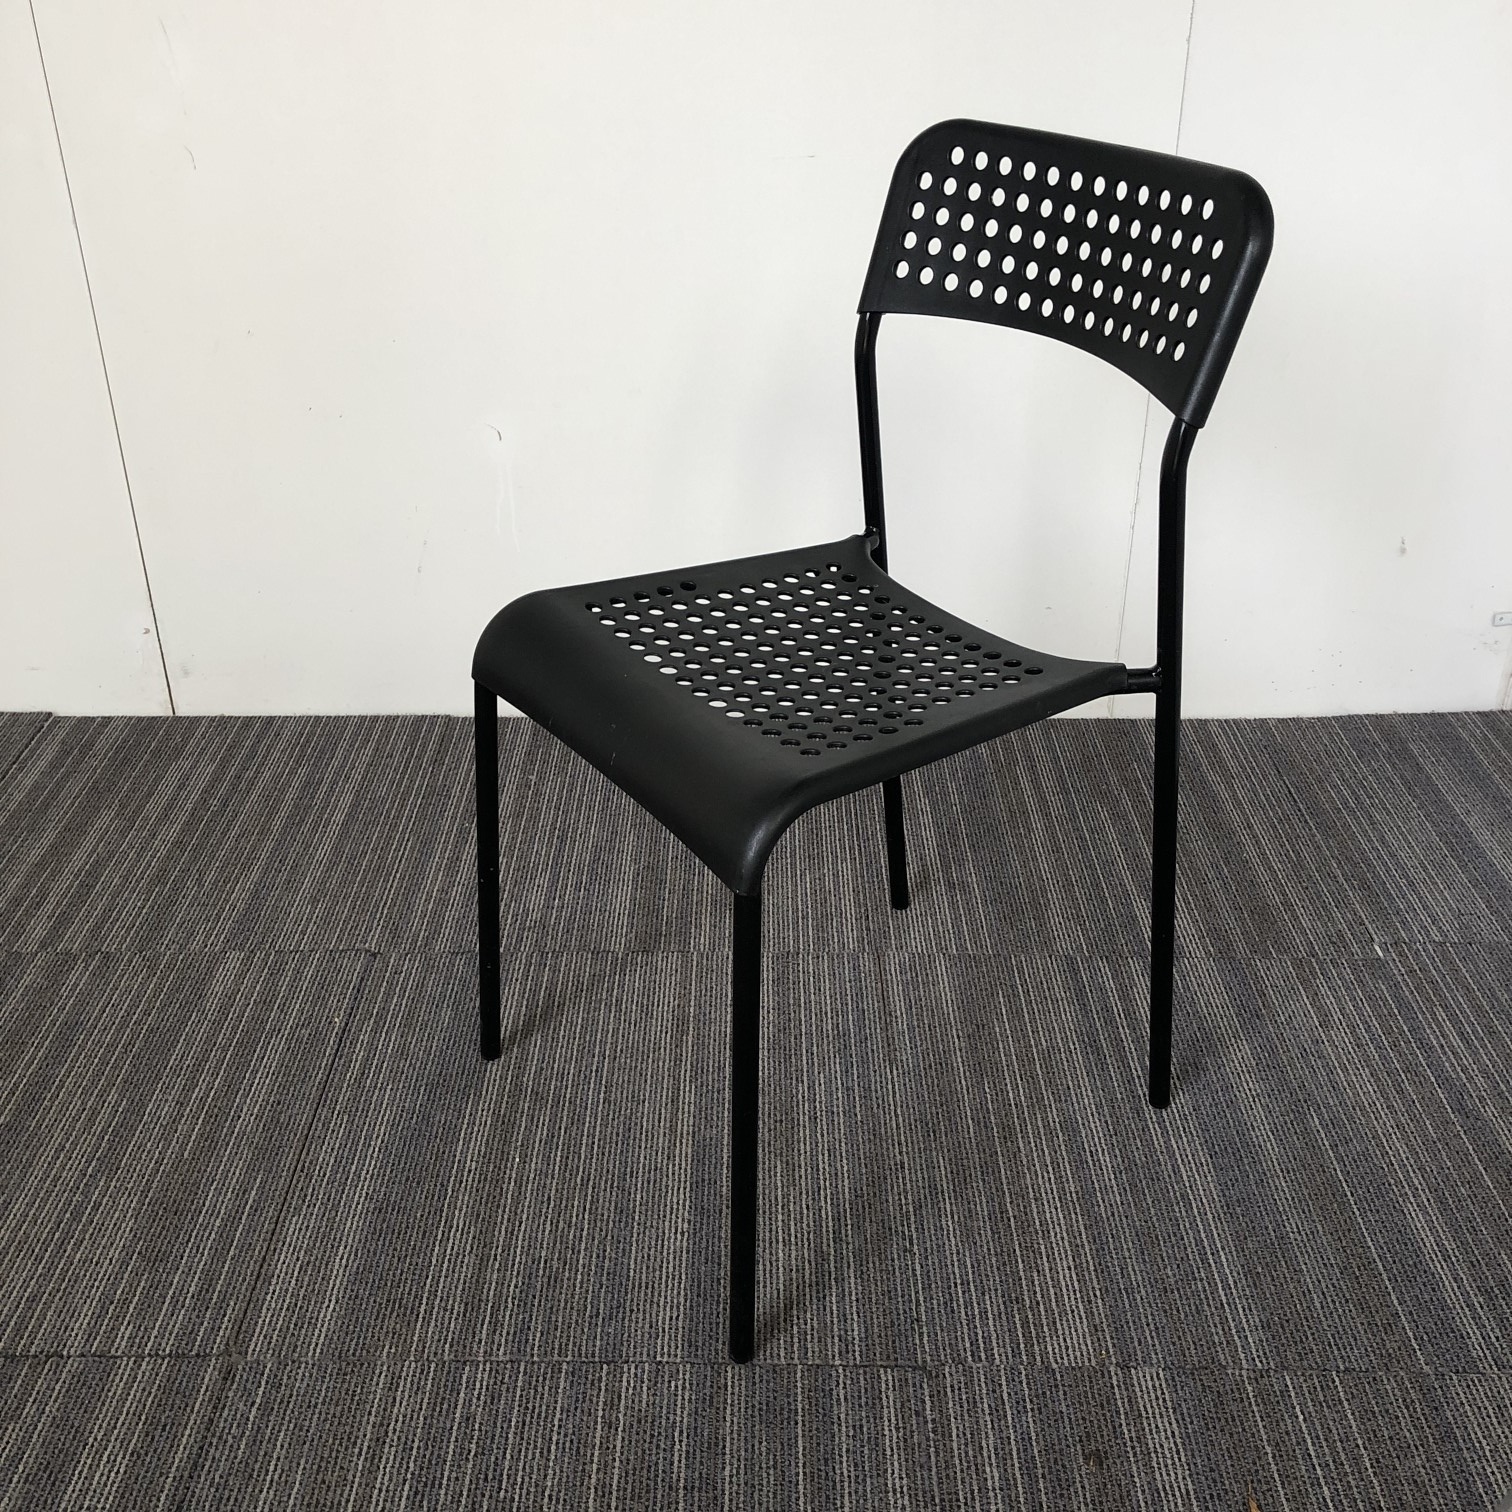 Ikea stoel zwart met gaten profiel v.a. €12,00 - Officemeubels